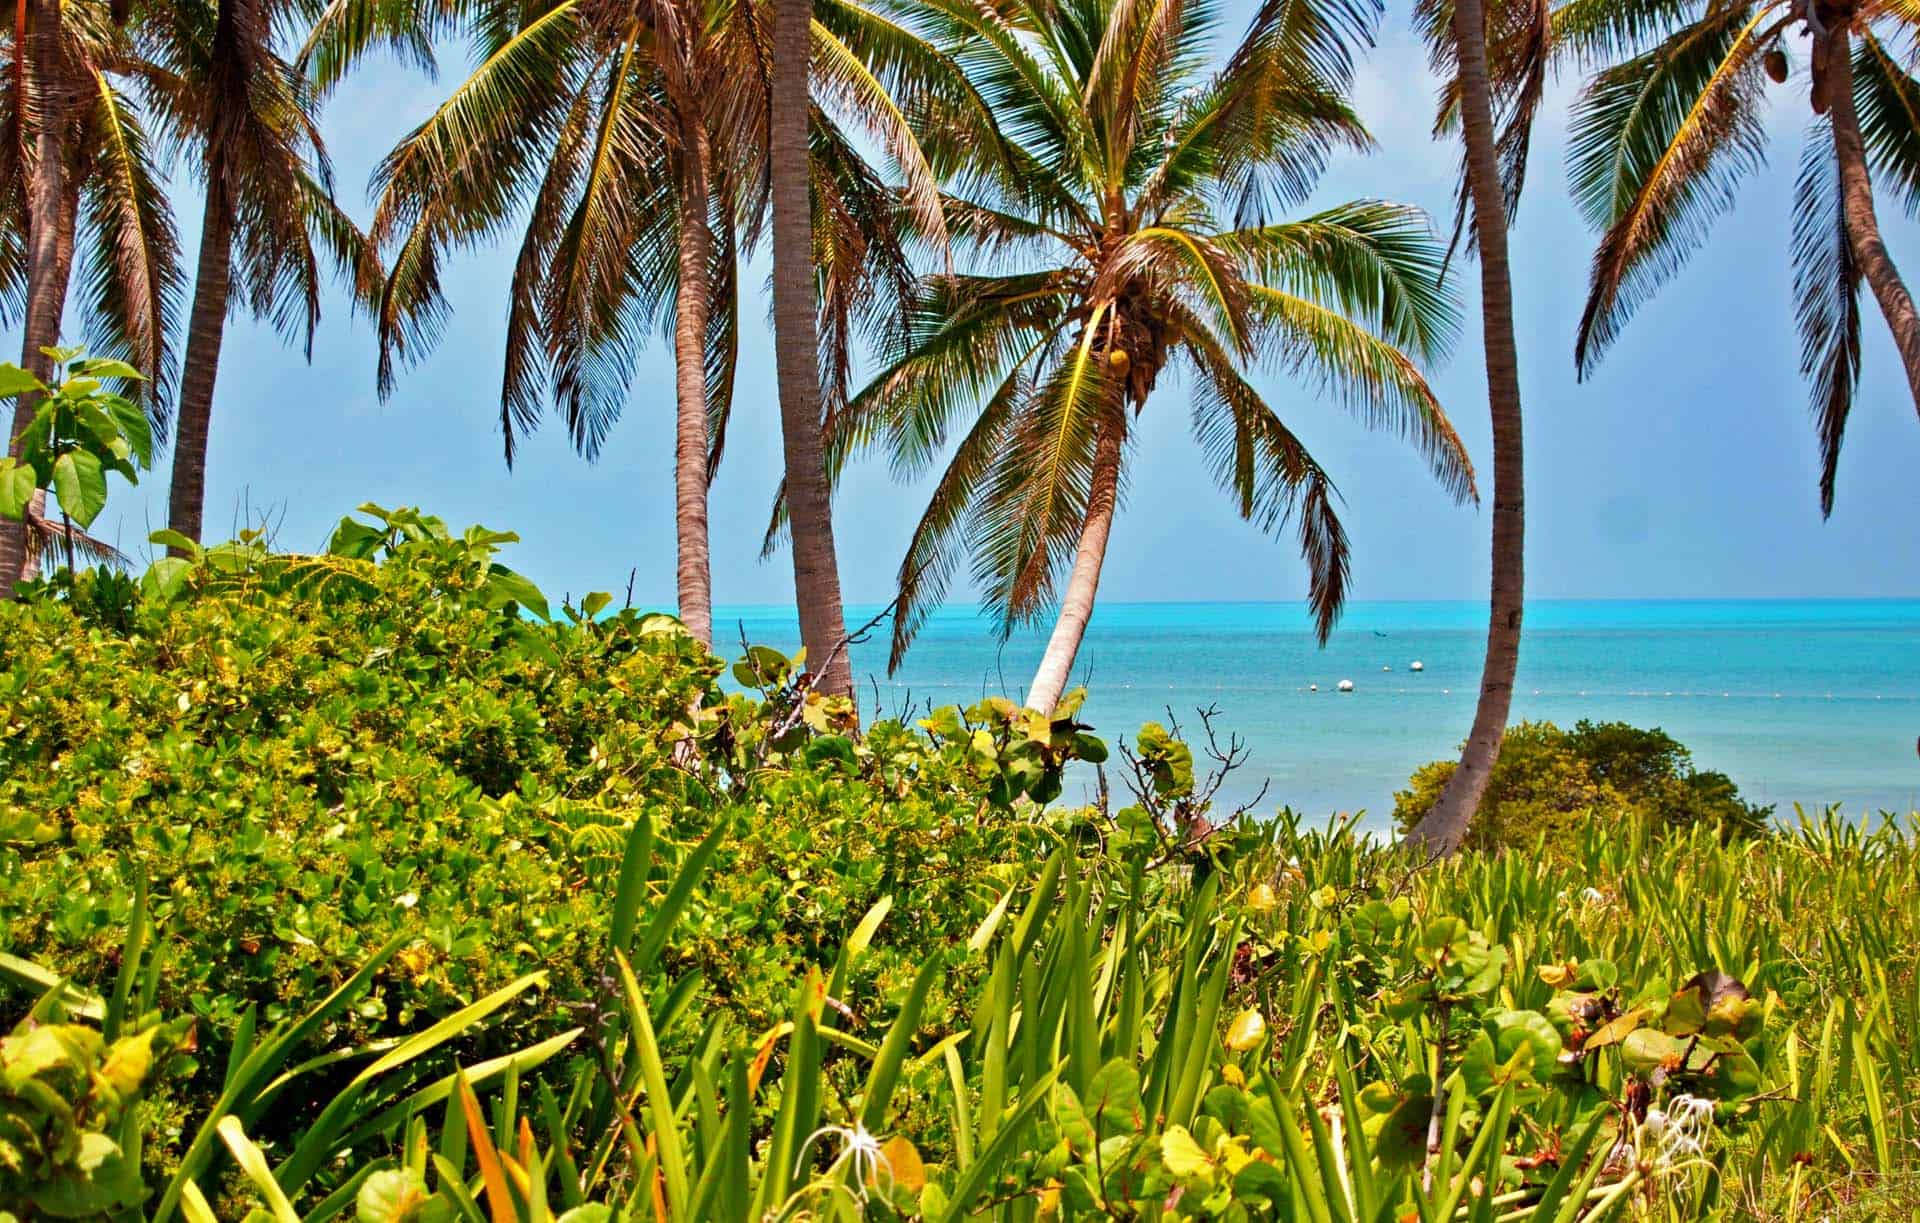 Vegetación tropical en Isla Contoy